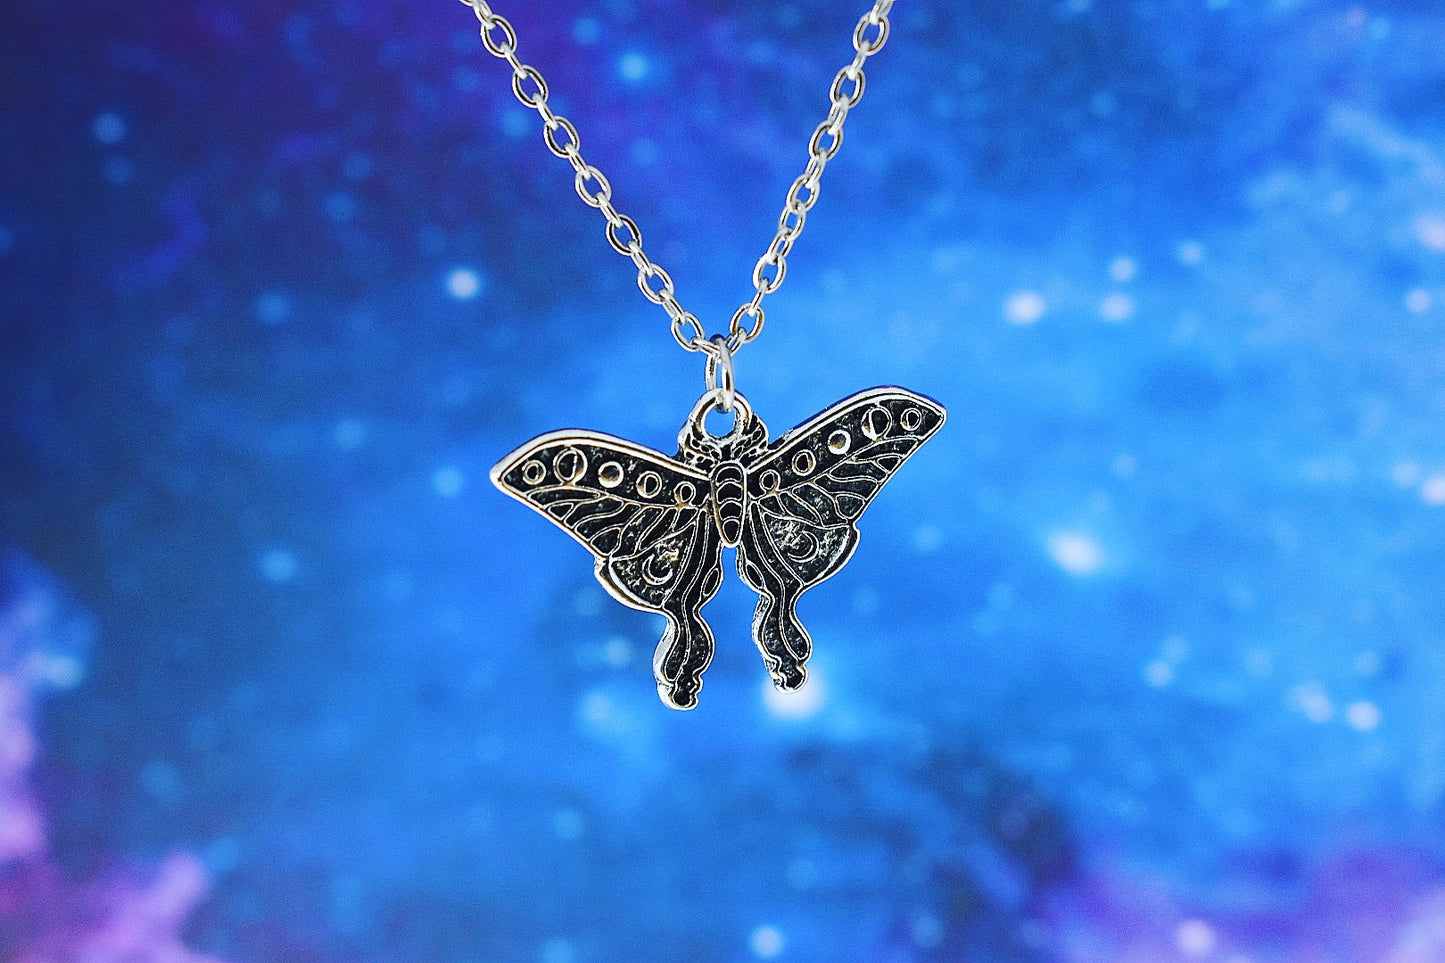 Moth pendant with triple moon symbol